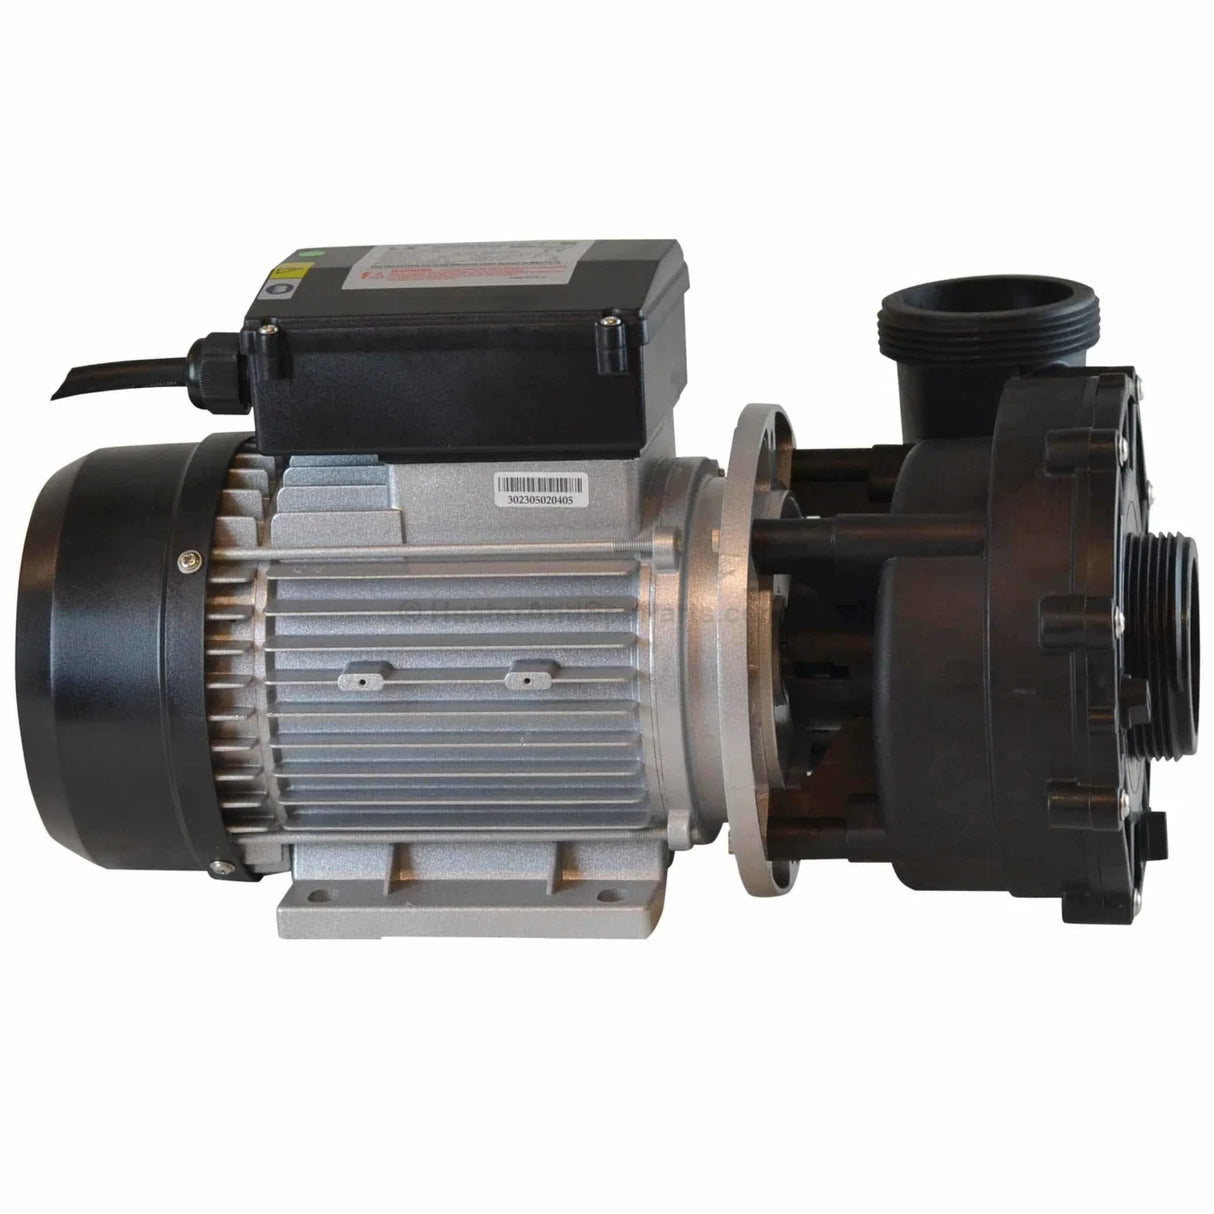 Universal Spa Jet Pump - Single-speed - LP200 2.0HP - LX Whirlpool - Heater and Spa Parts